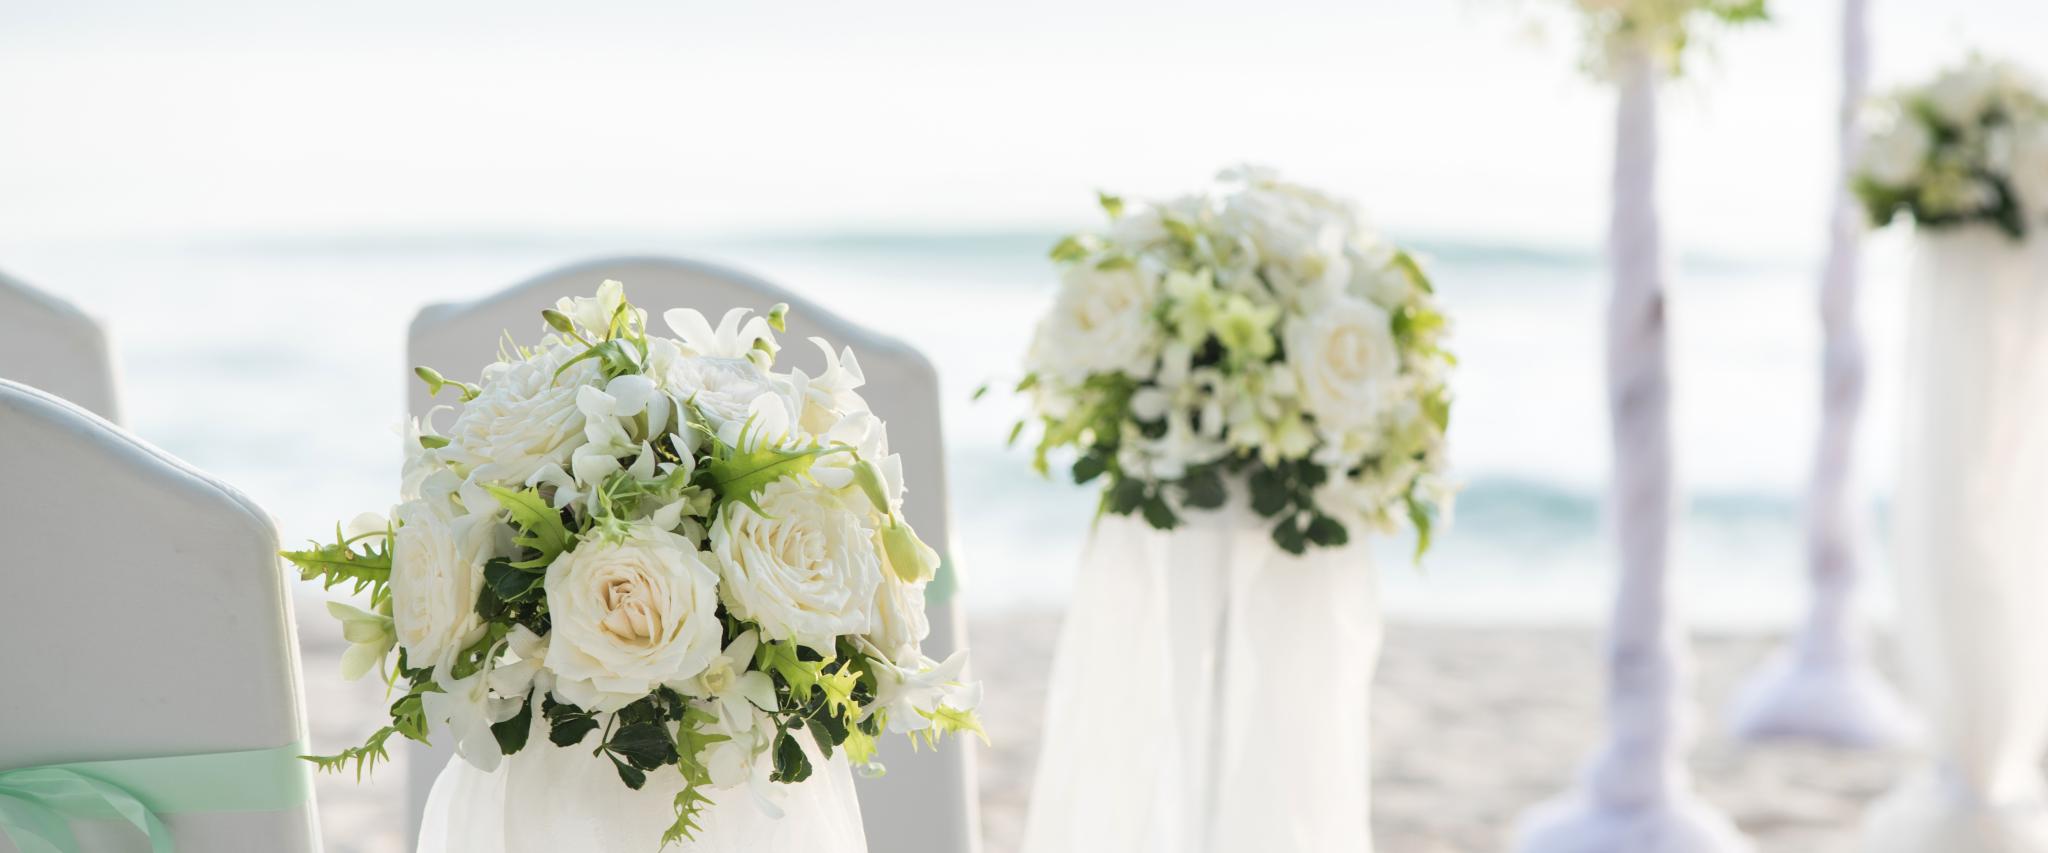 Planning A Beach Wedding Weddings Visit Gulf Shores Orange Beach